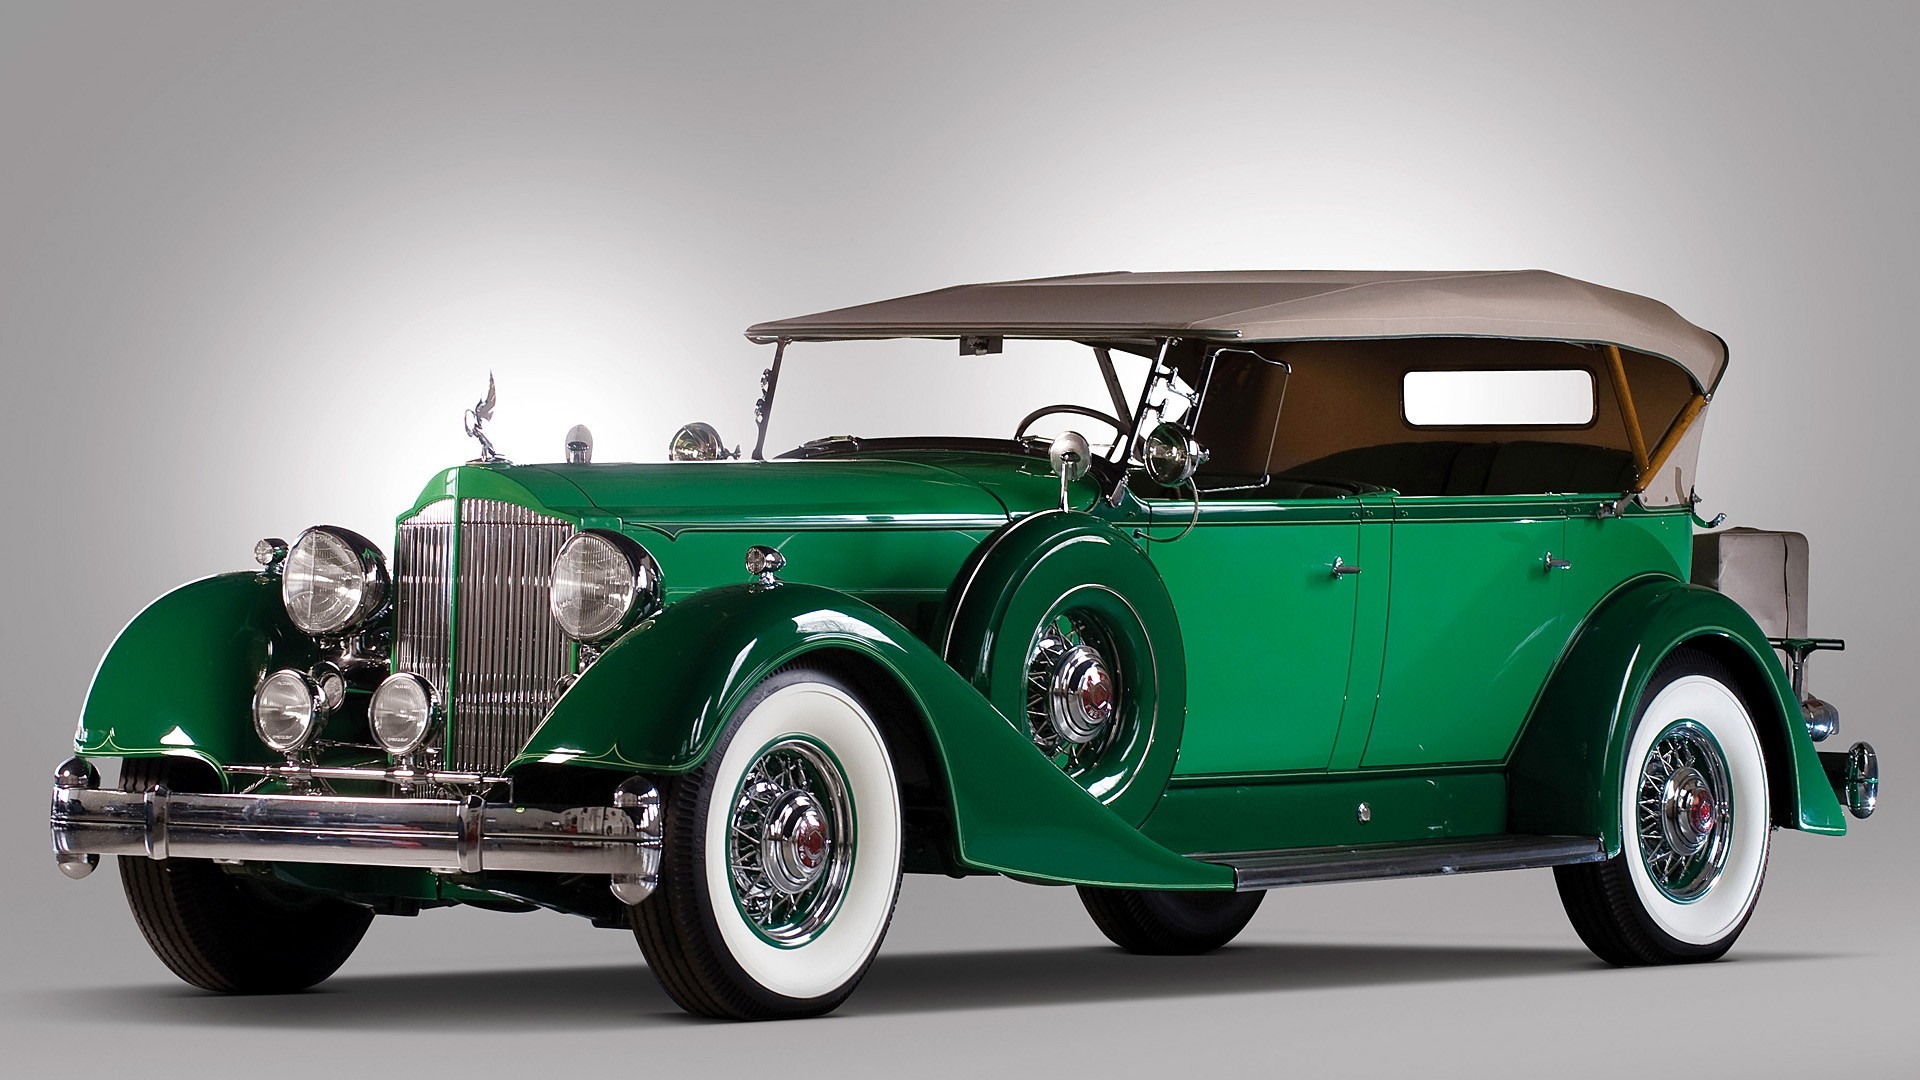 1920x1080 Classic Cars Wallpapers 2560x1600 (591.16 KB) ...